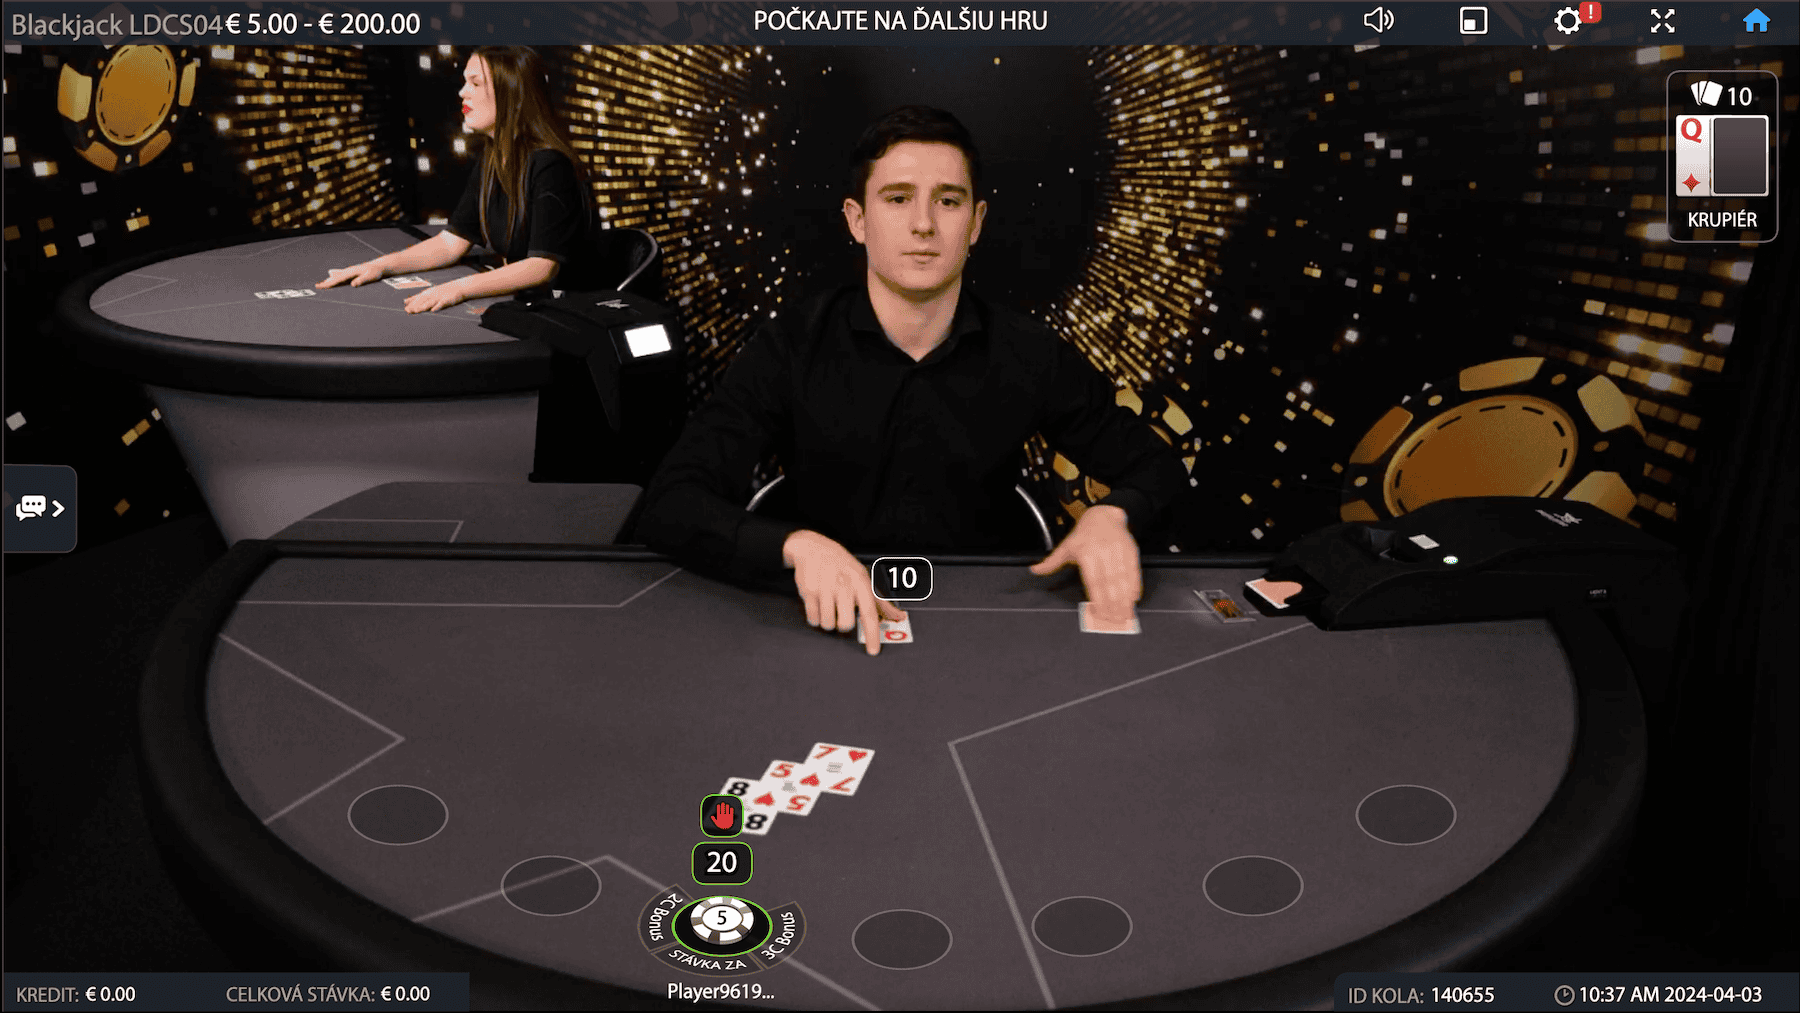 Tipsport live casino blackjack - živé hry online